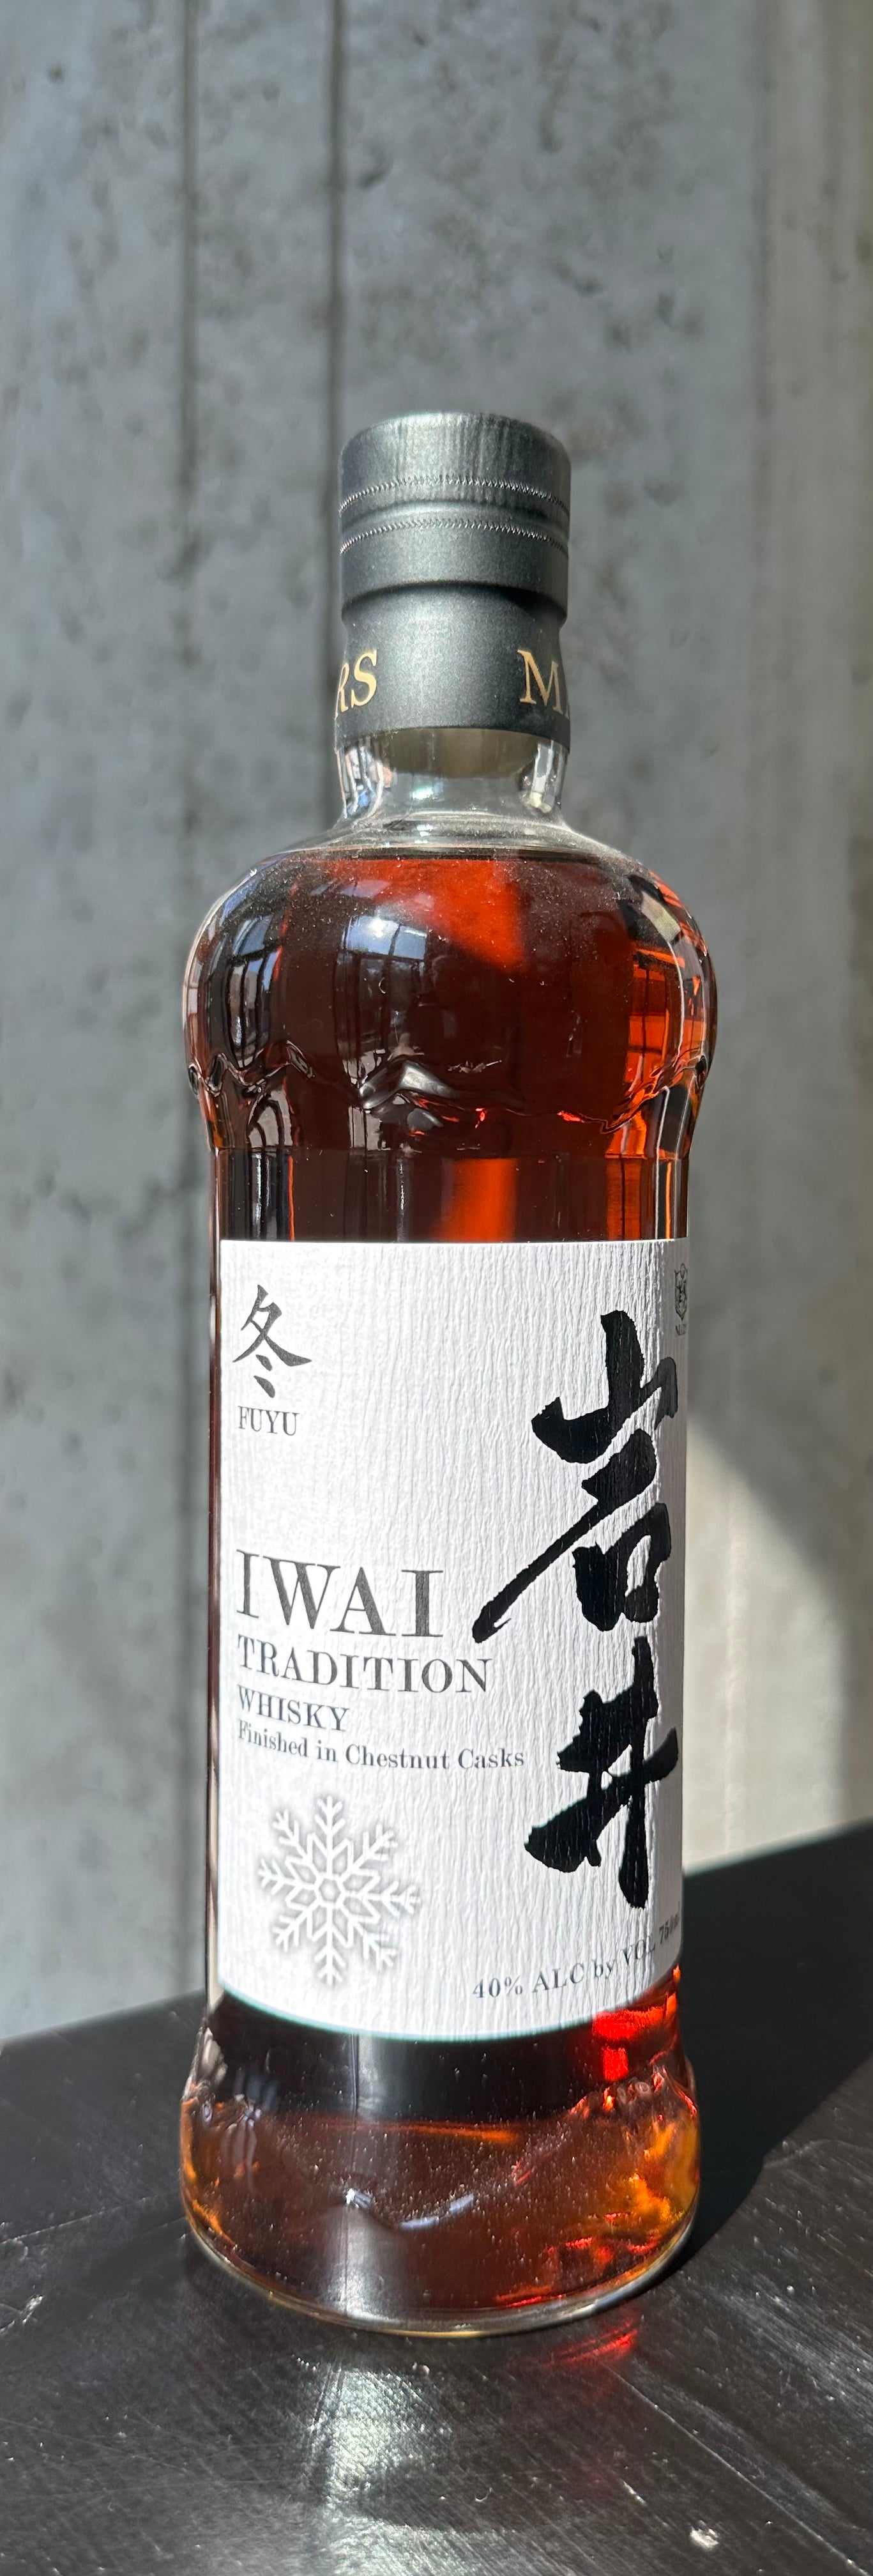 Mars Whisky Iwai Tradition "Fuyu"  Chestnut Cask Finished